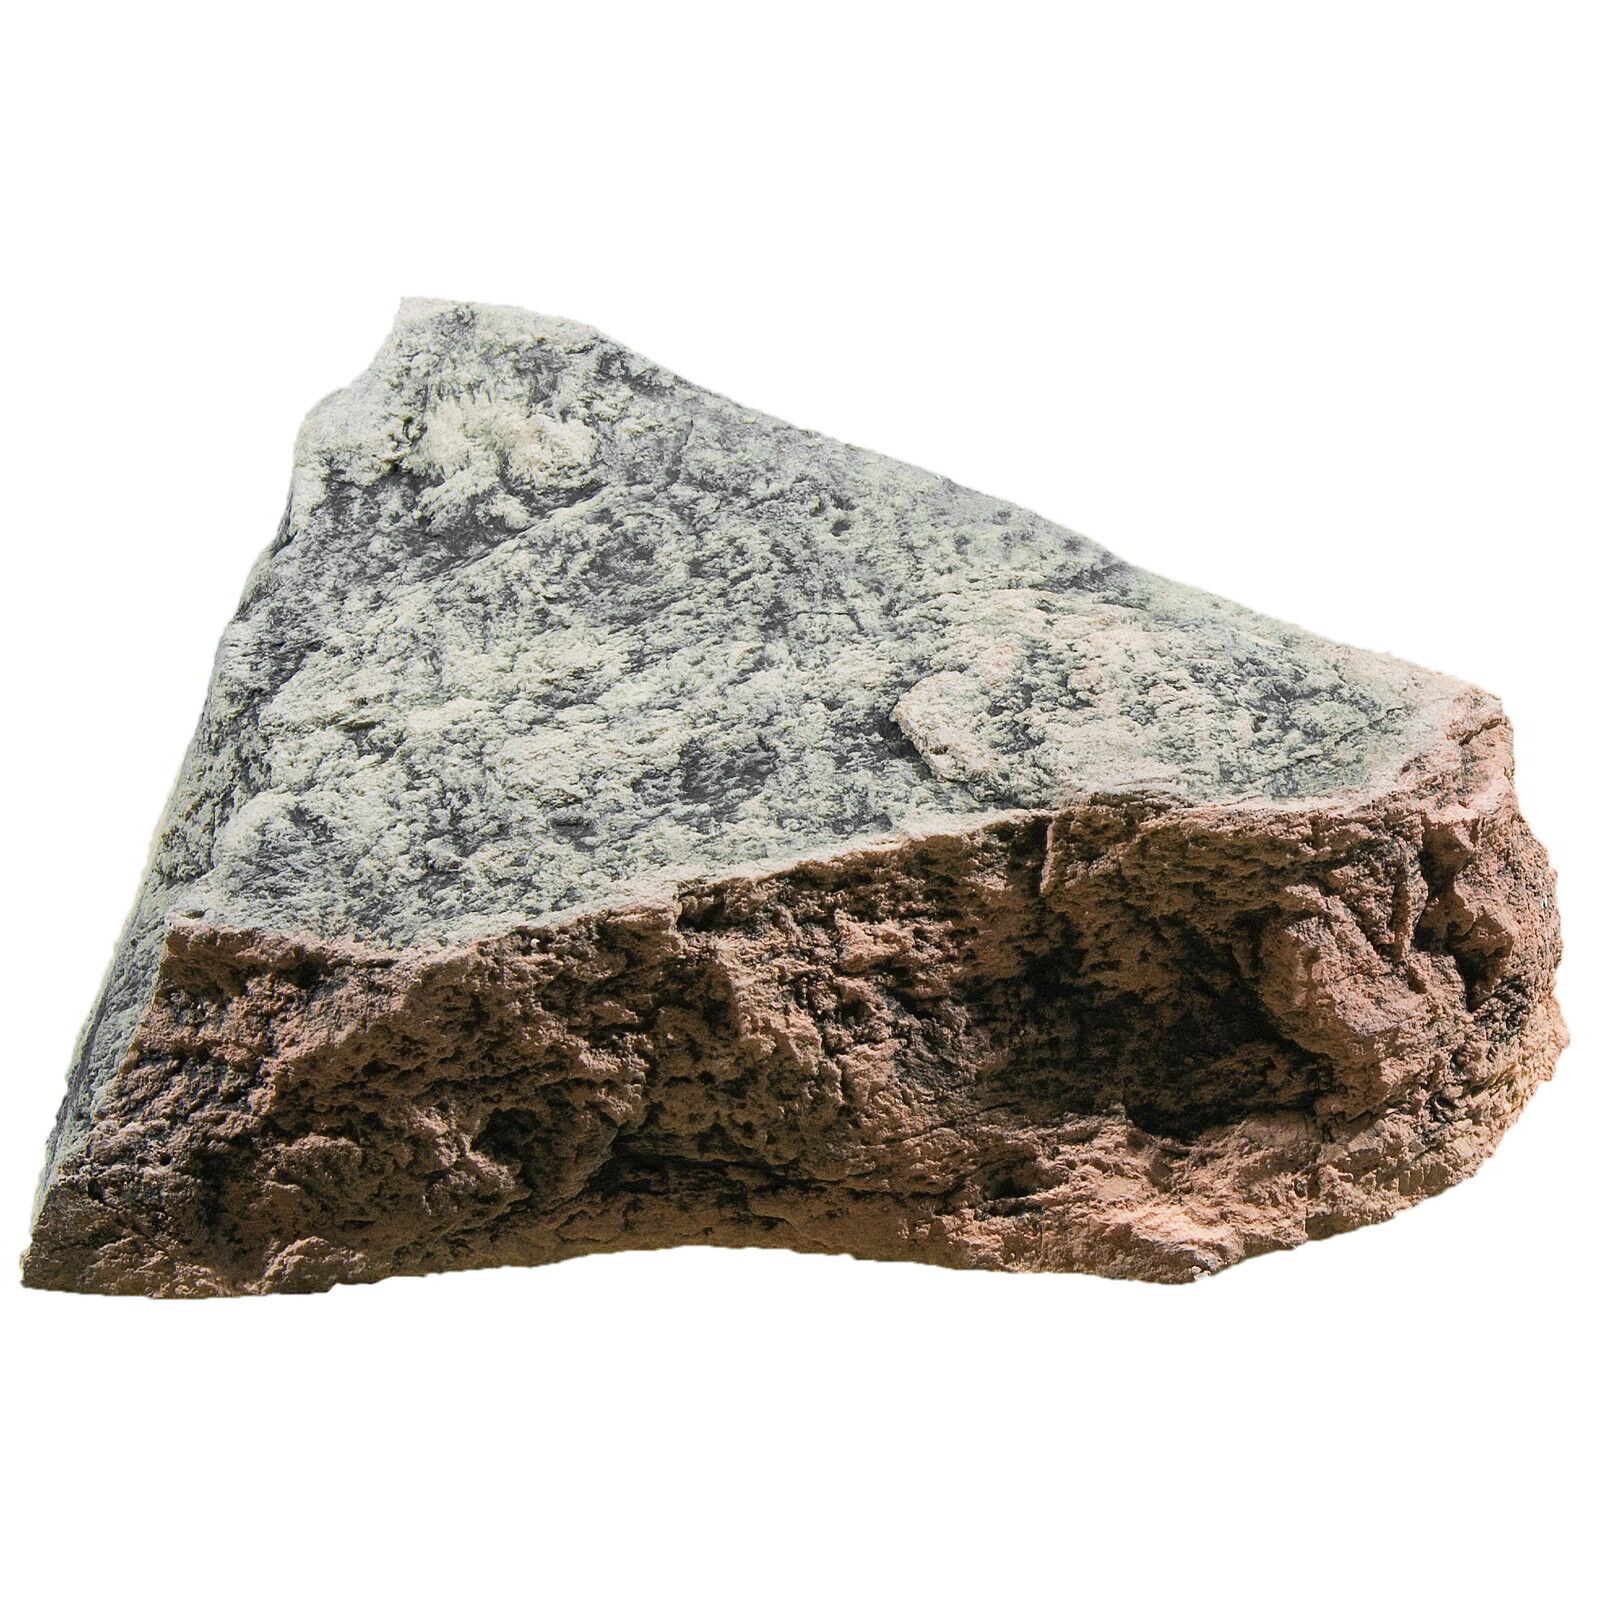 Back to Nature - Aquarium Module Basalt/Gneiss